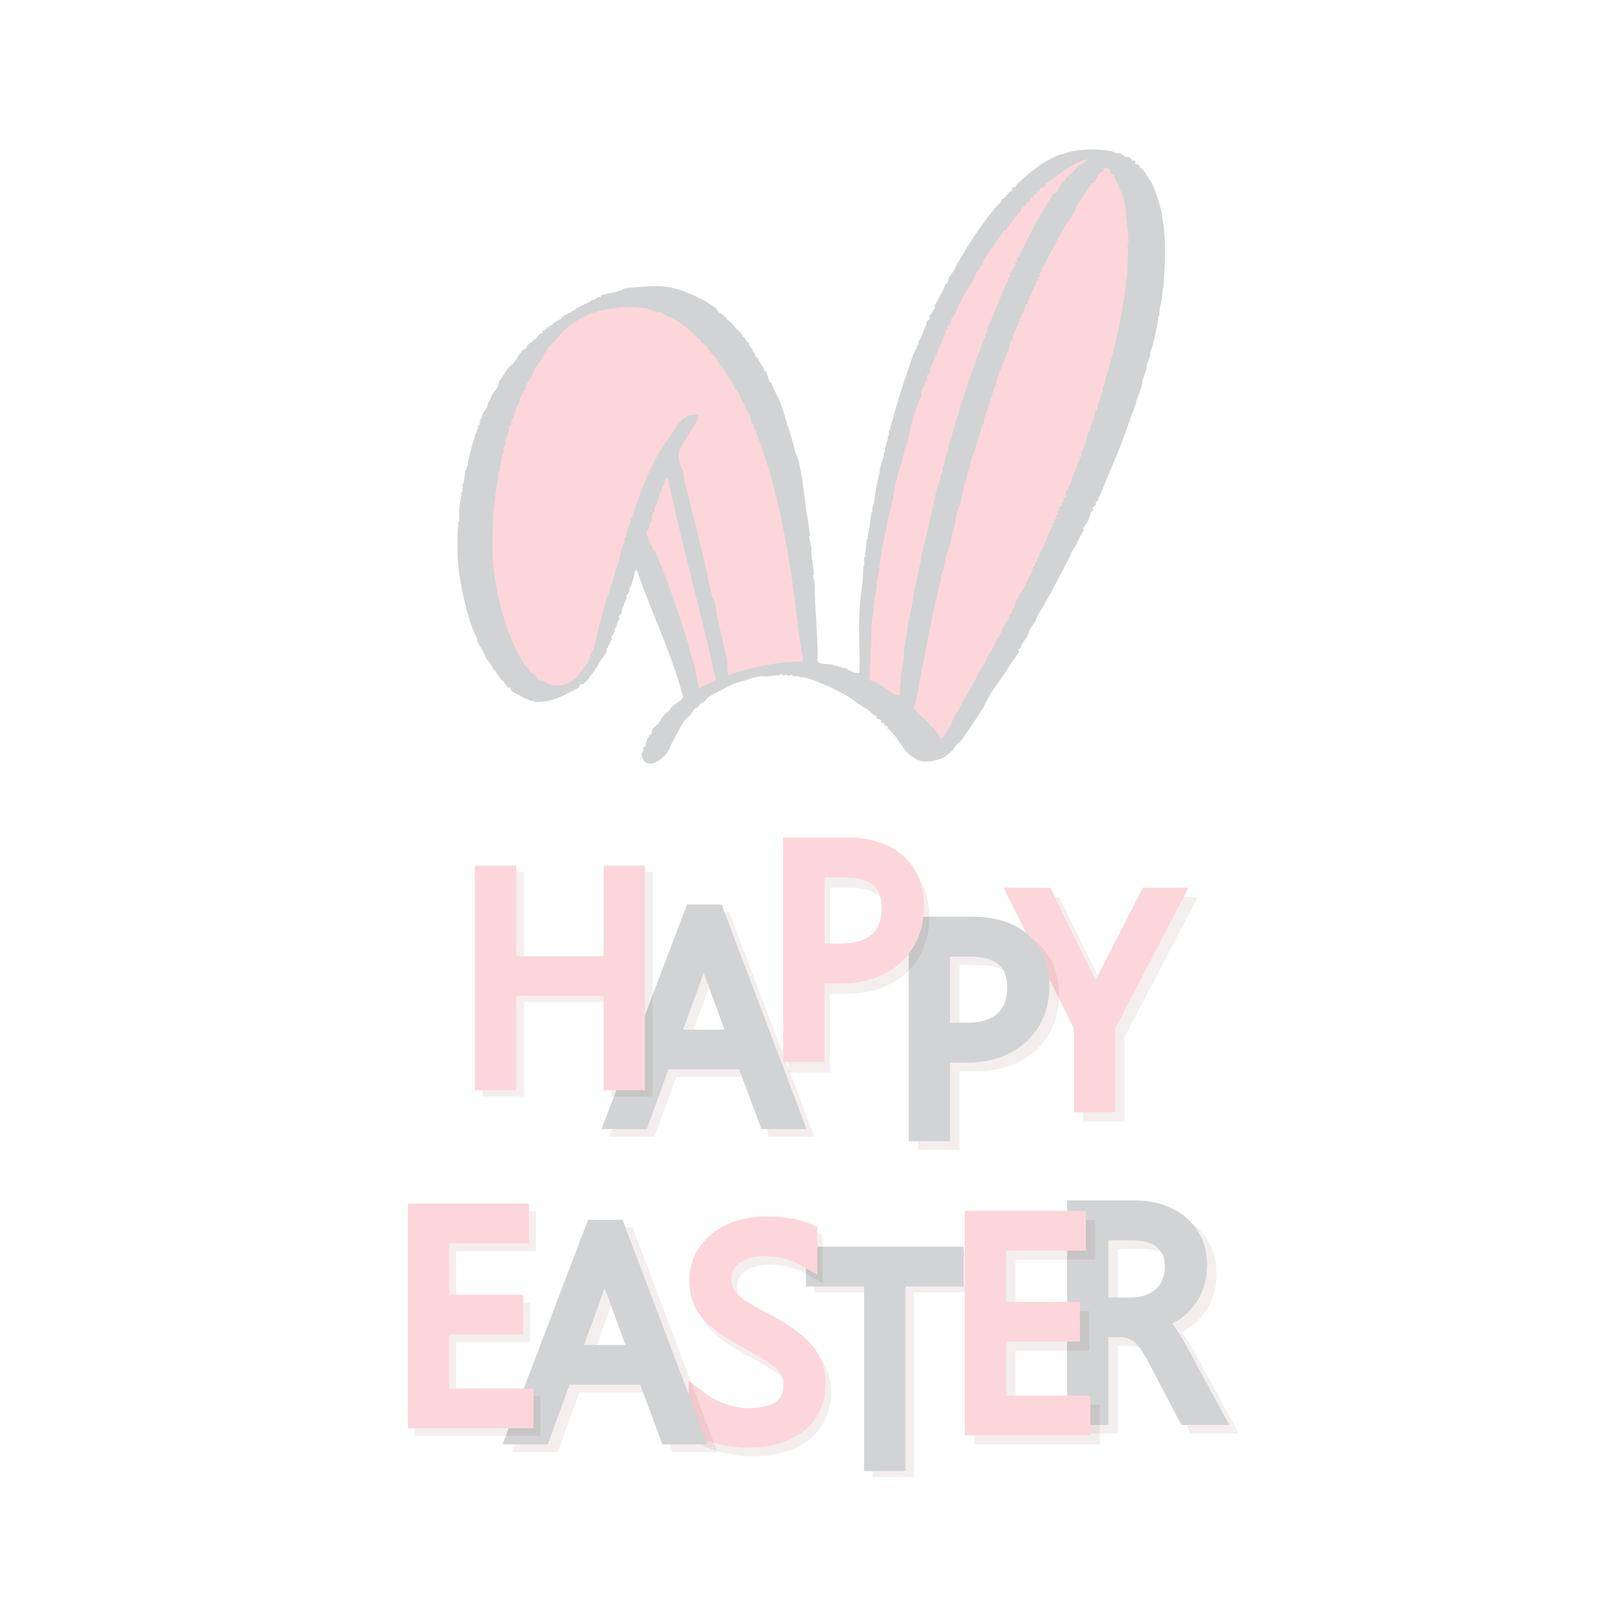 Happy Easter with bunny ears. by ku4erashka